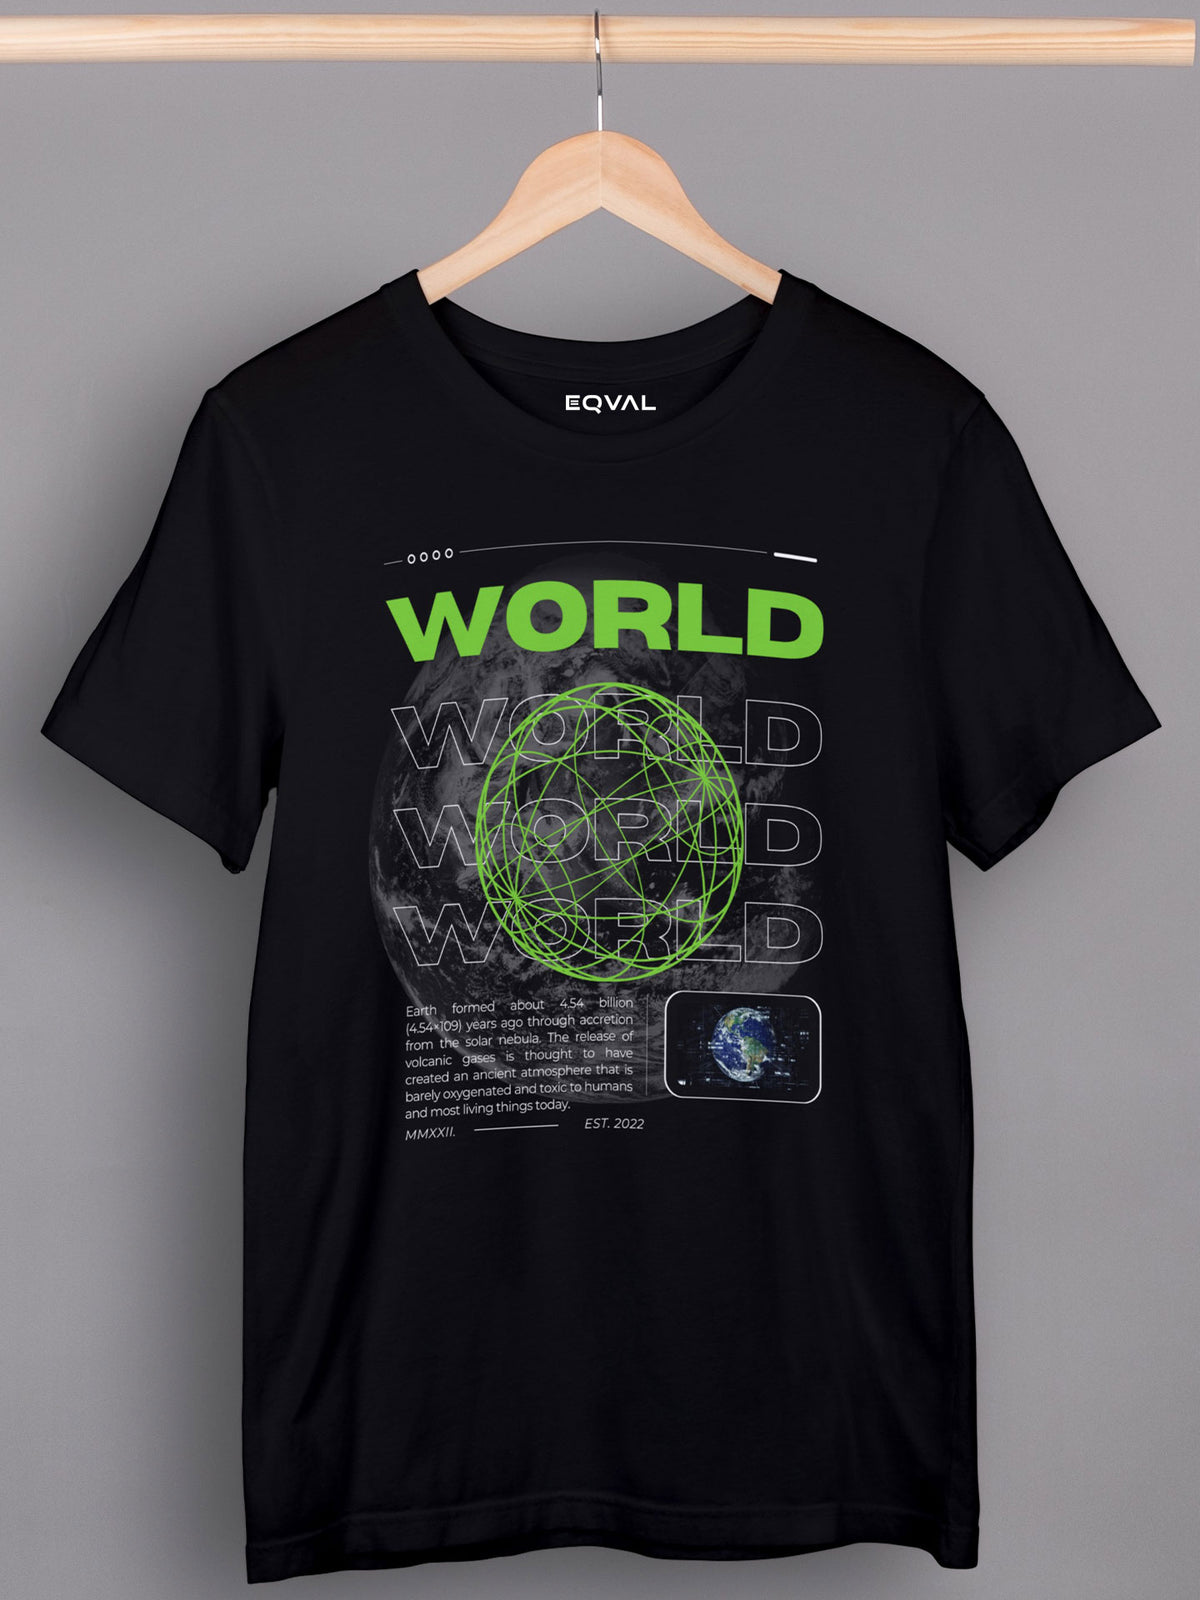 Men's Black World Printed T-shirt